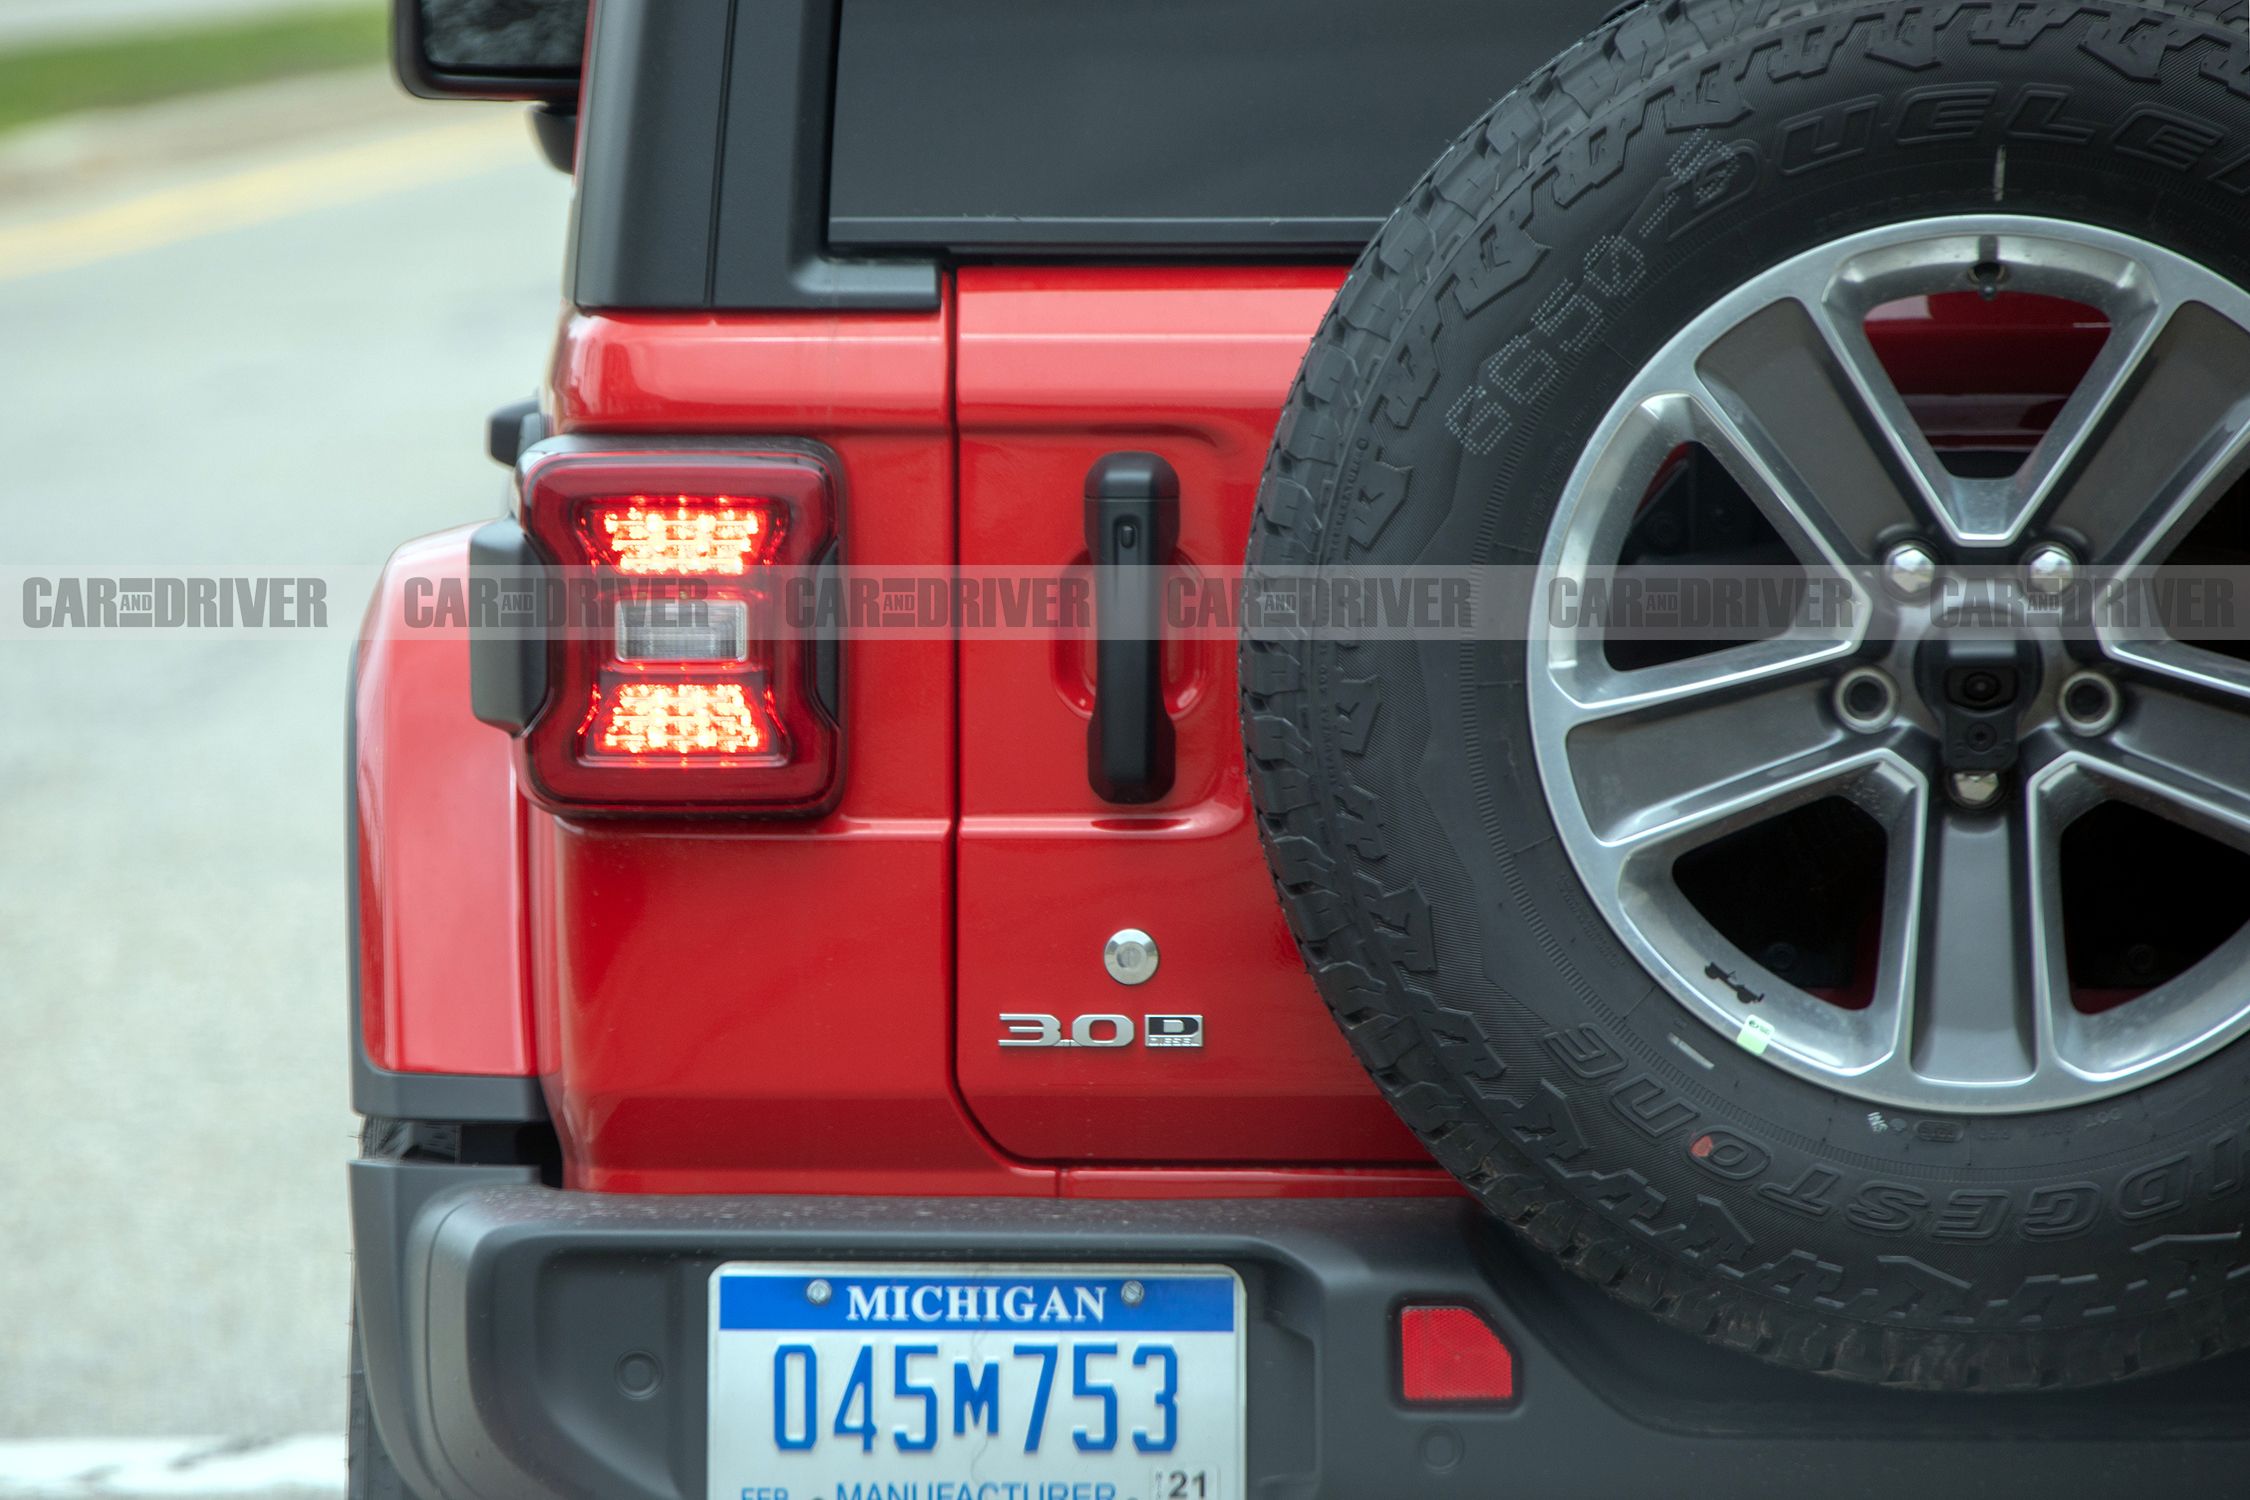 Diesel-Powered Jeep Wrangler Spied Wearing Distinct Badge - Spy Photos,  Details